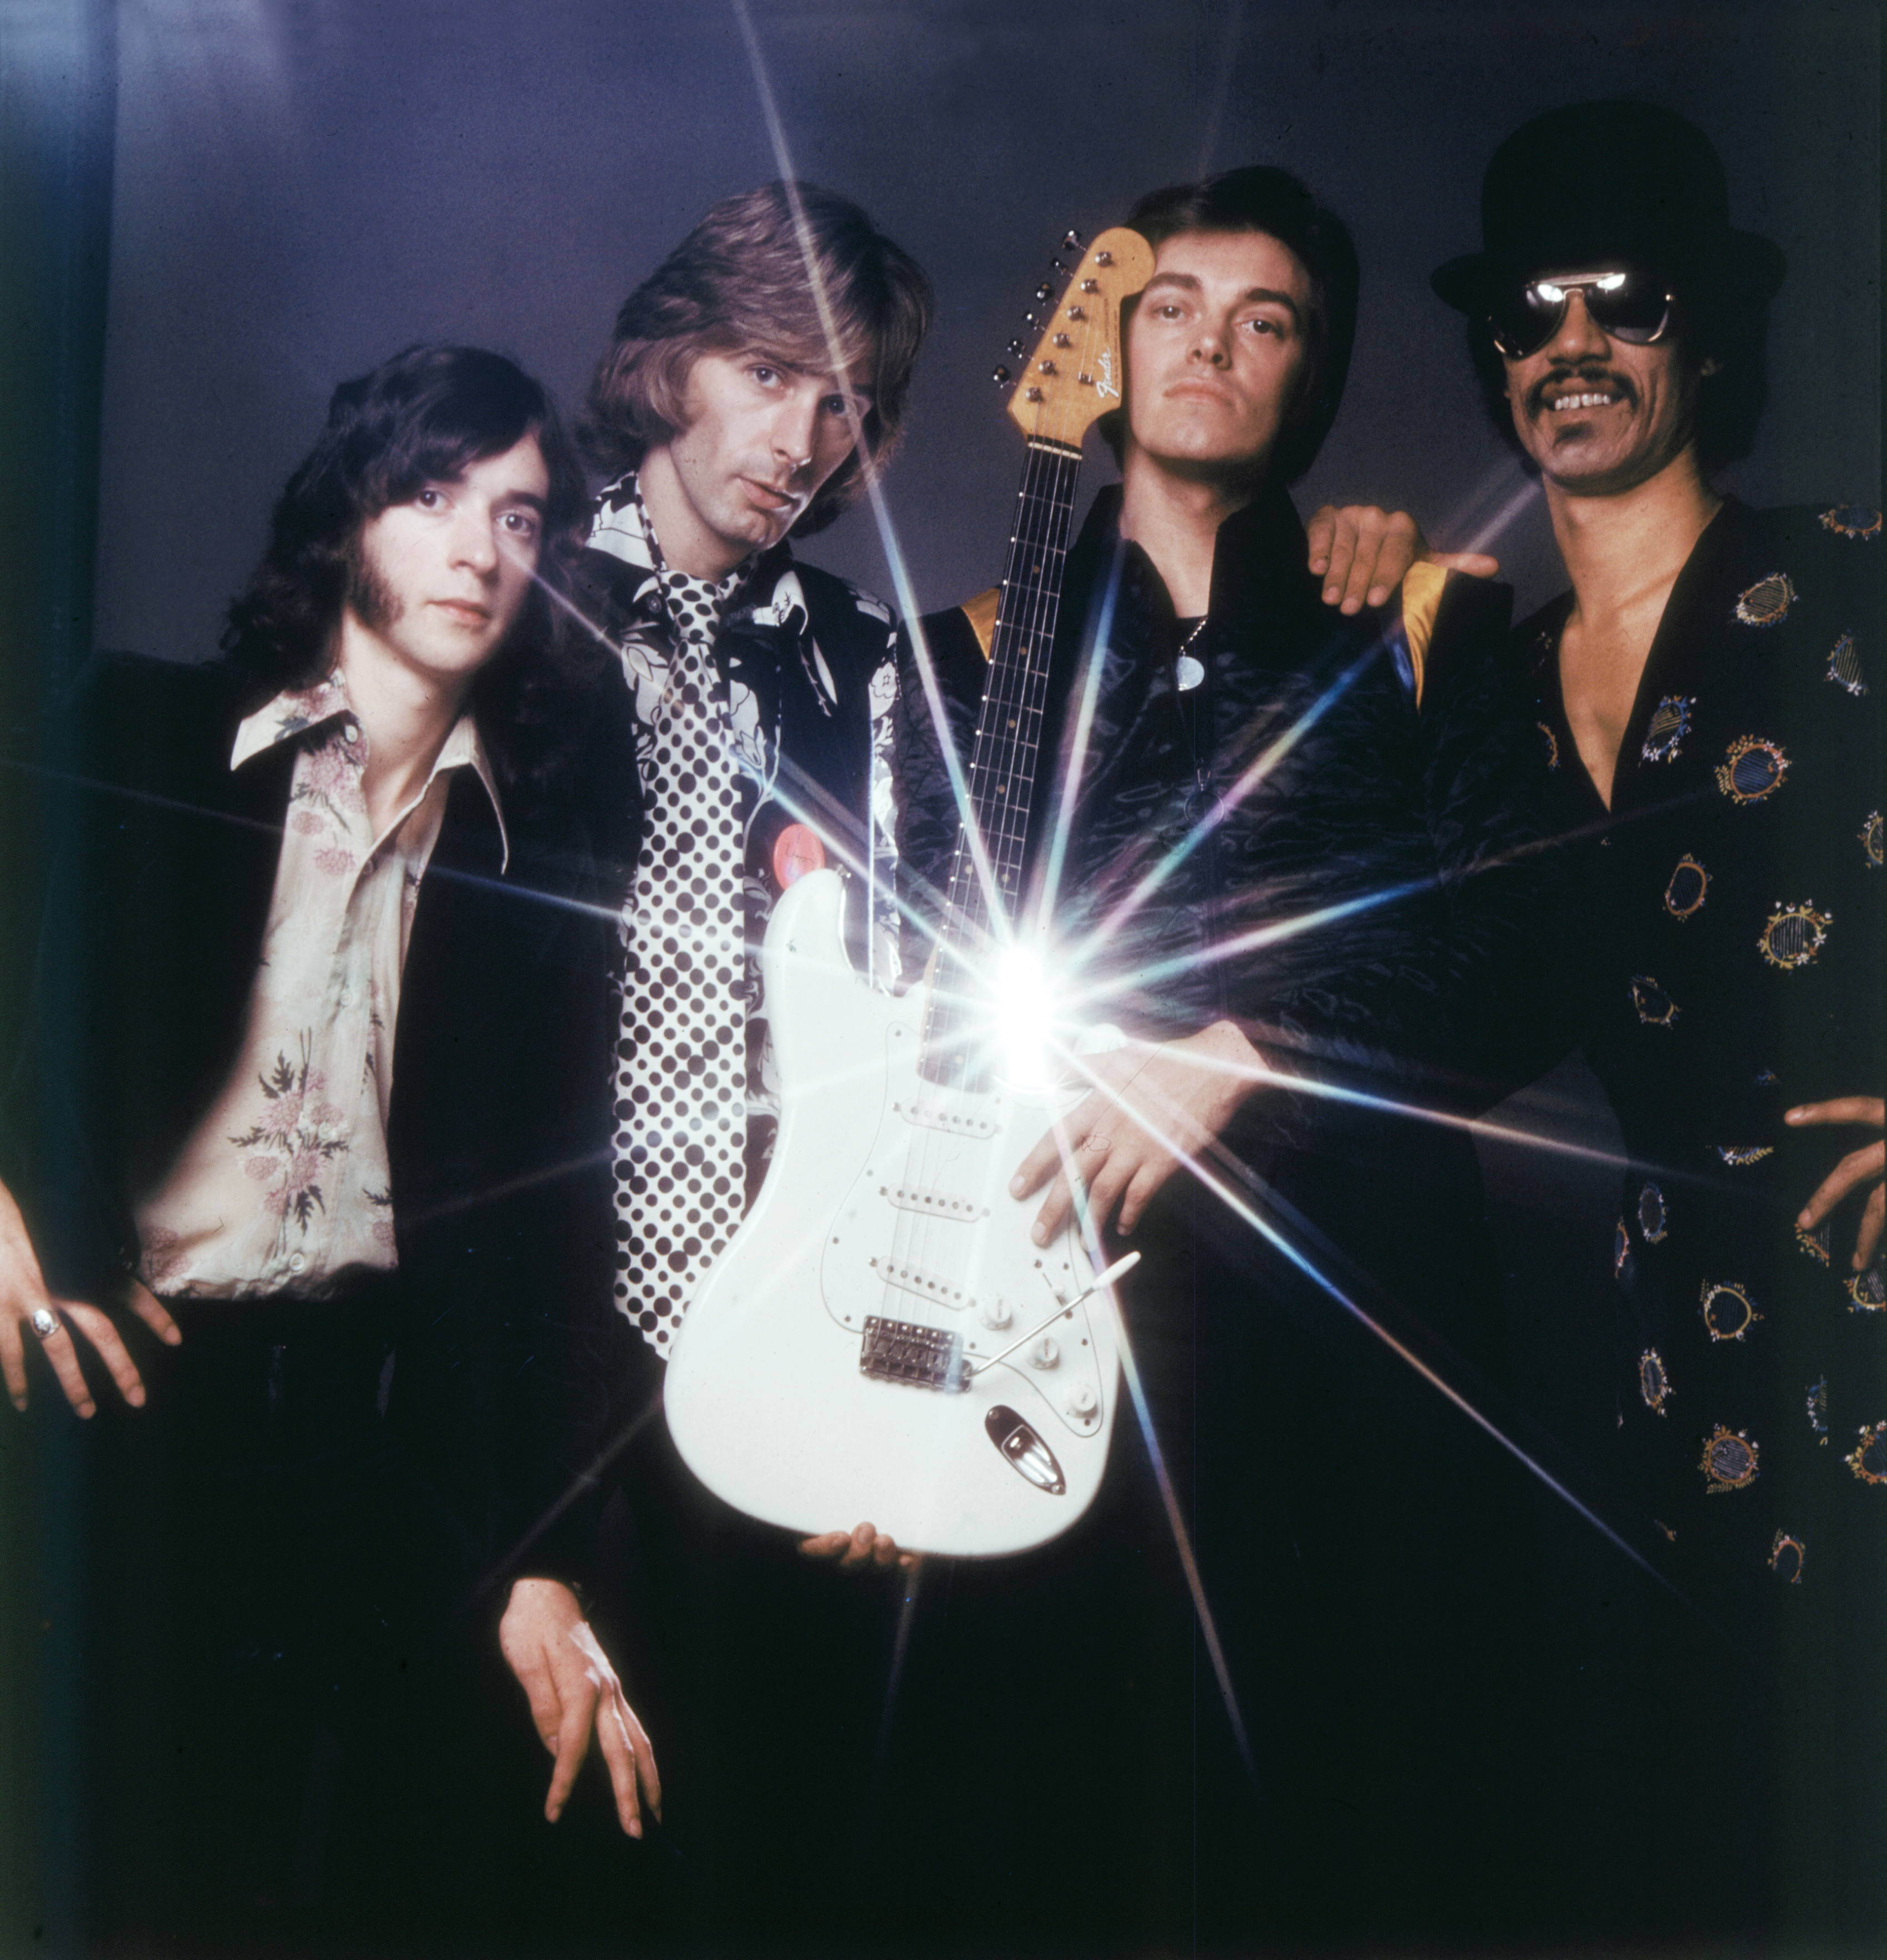 Be-Bop Deluxe in 1976, from left: Keyboardist Andy Clarke, drummer Simon Fox, guitarist/leader Bill Nelson, bassist Charlie Tumahai.